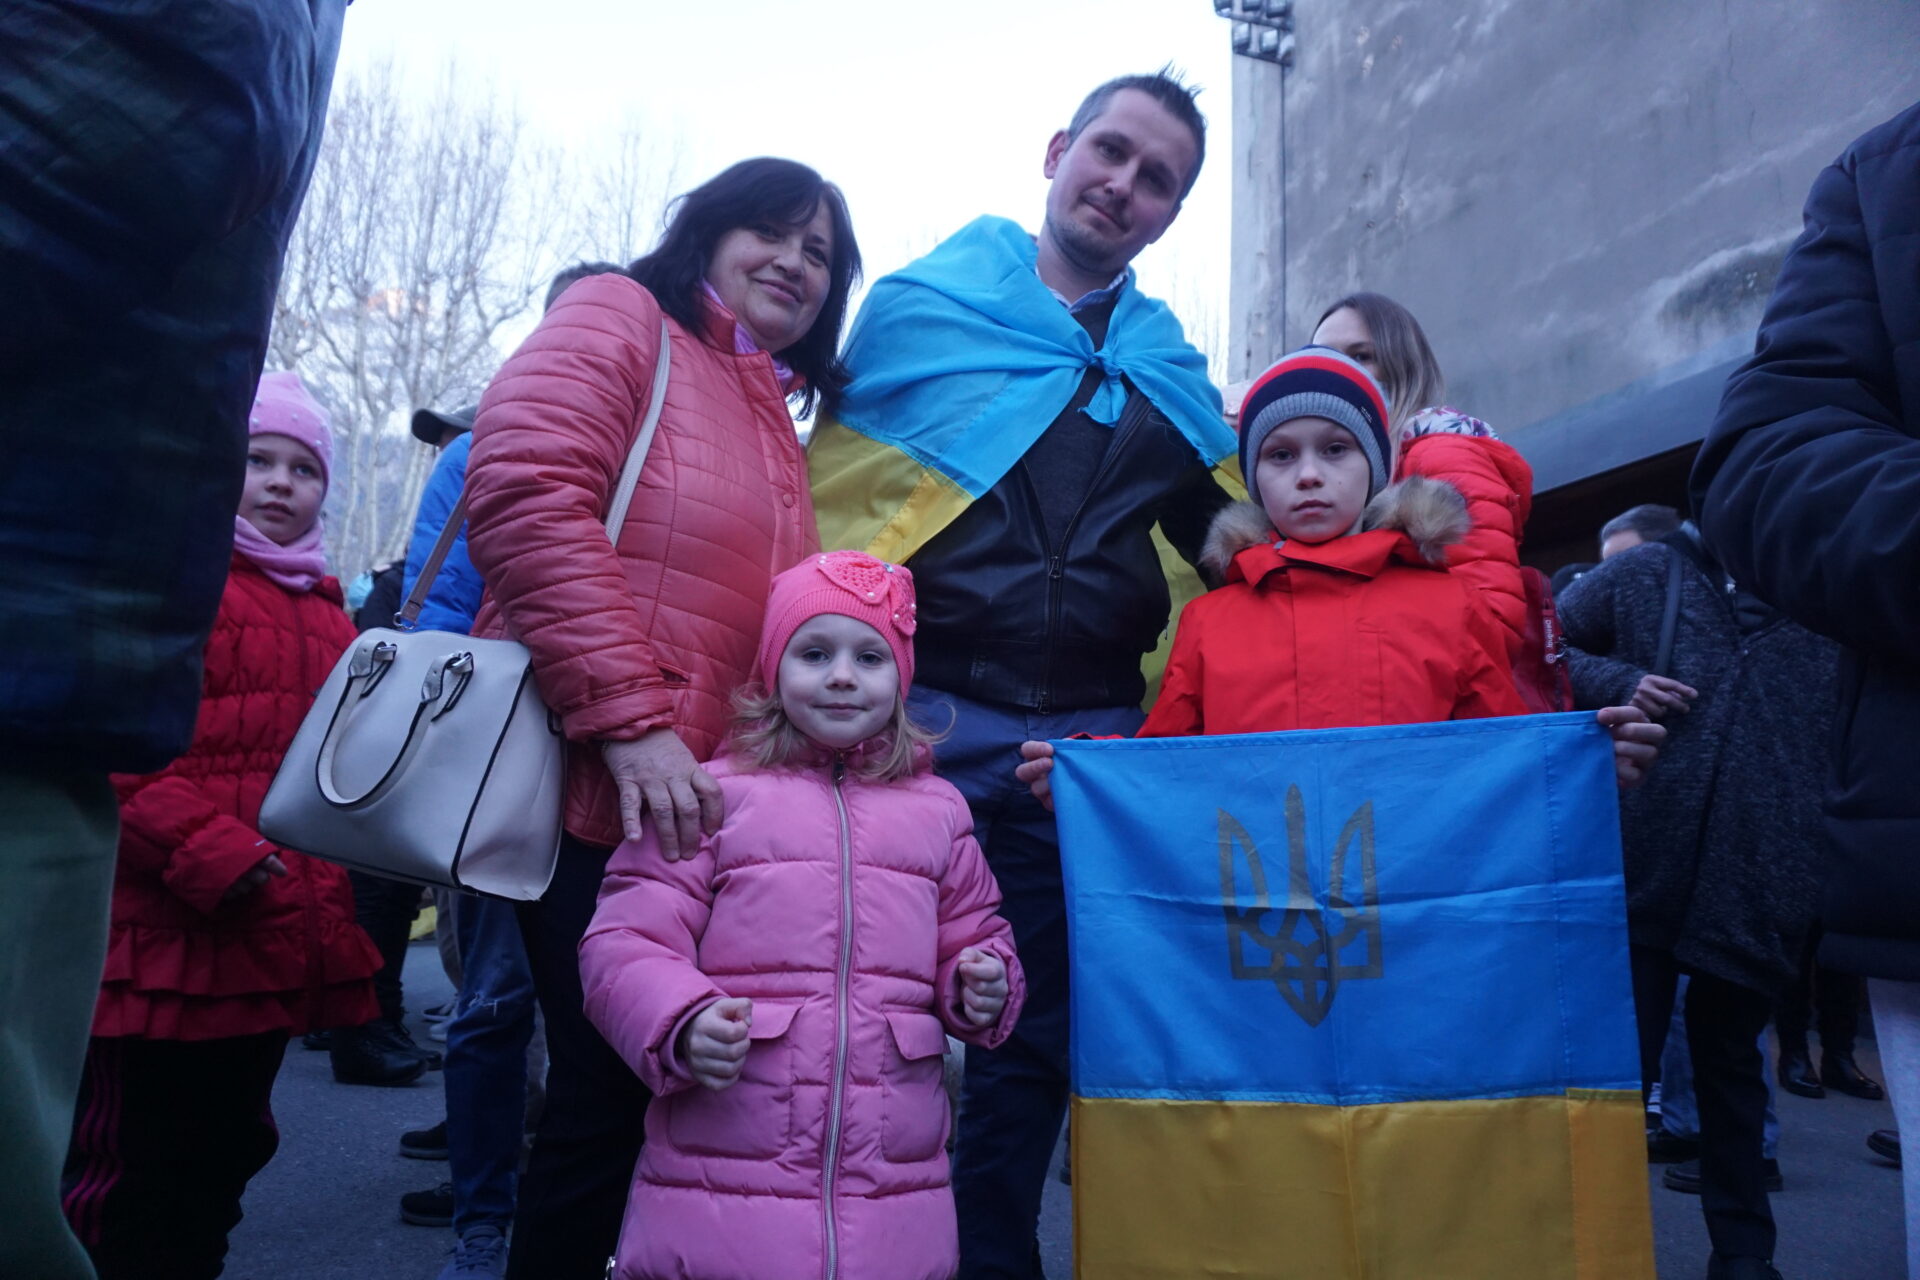 Manifestazione no alla guerra Ucraina - Russia Aosta